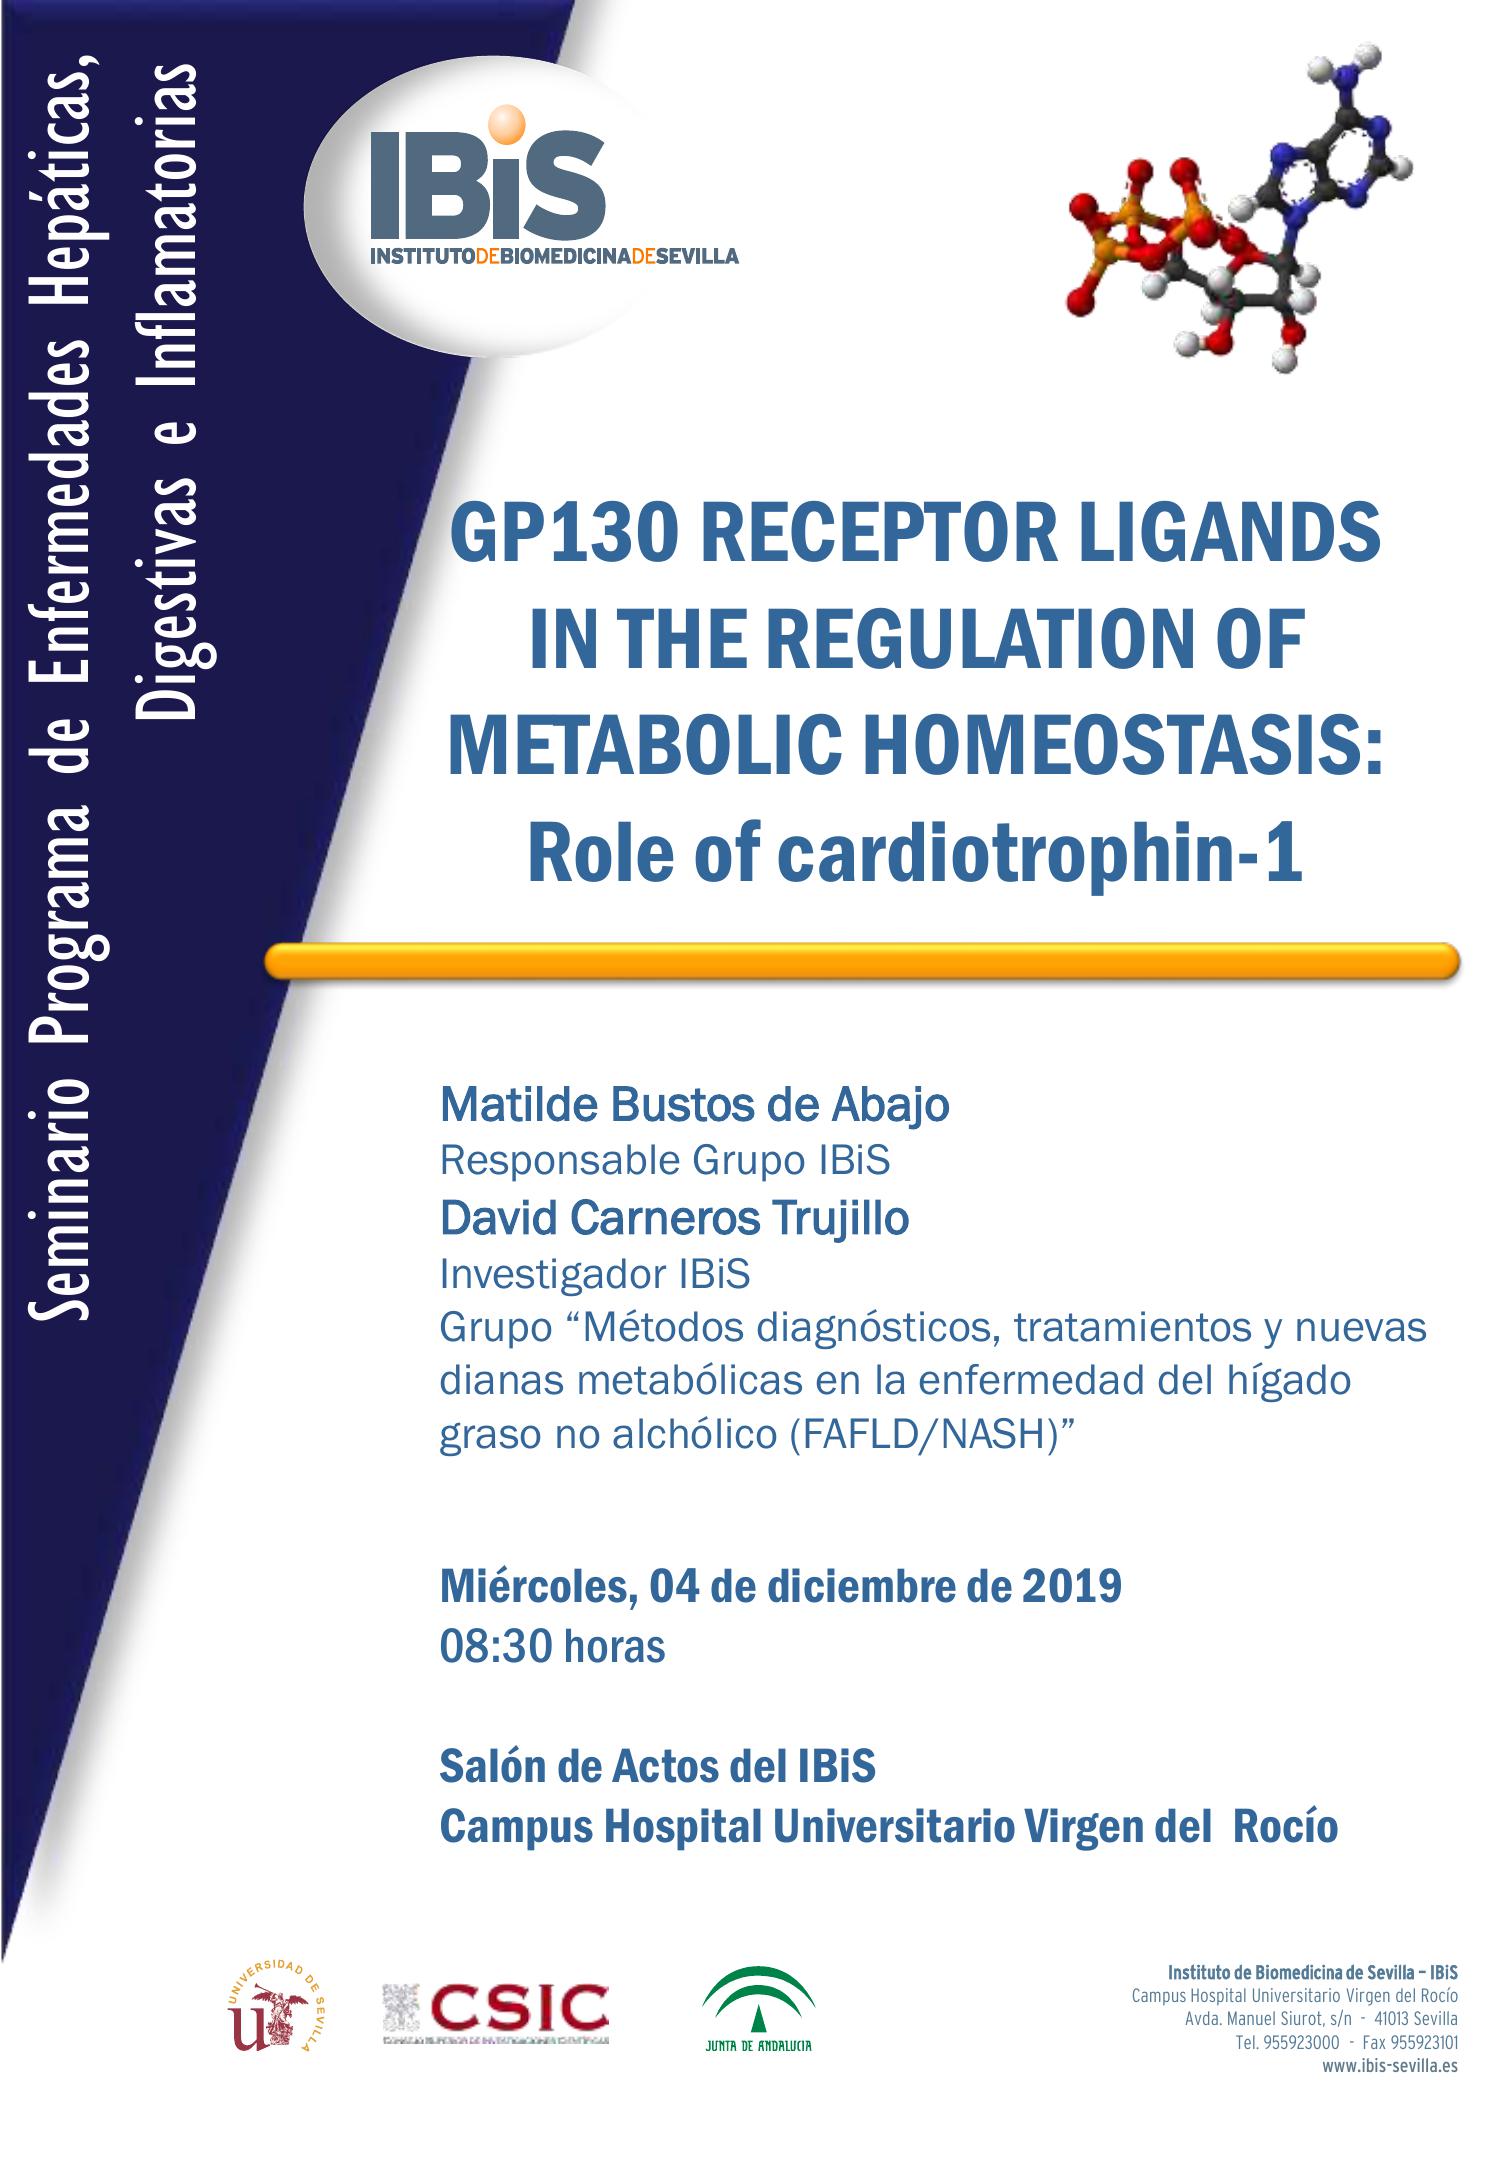 Poster: GP130 RECEPTOR LIGANDS IN THE REGULATION OF METABOLIC HOMEOSTASIS: Role of cardiotrophin-1